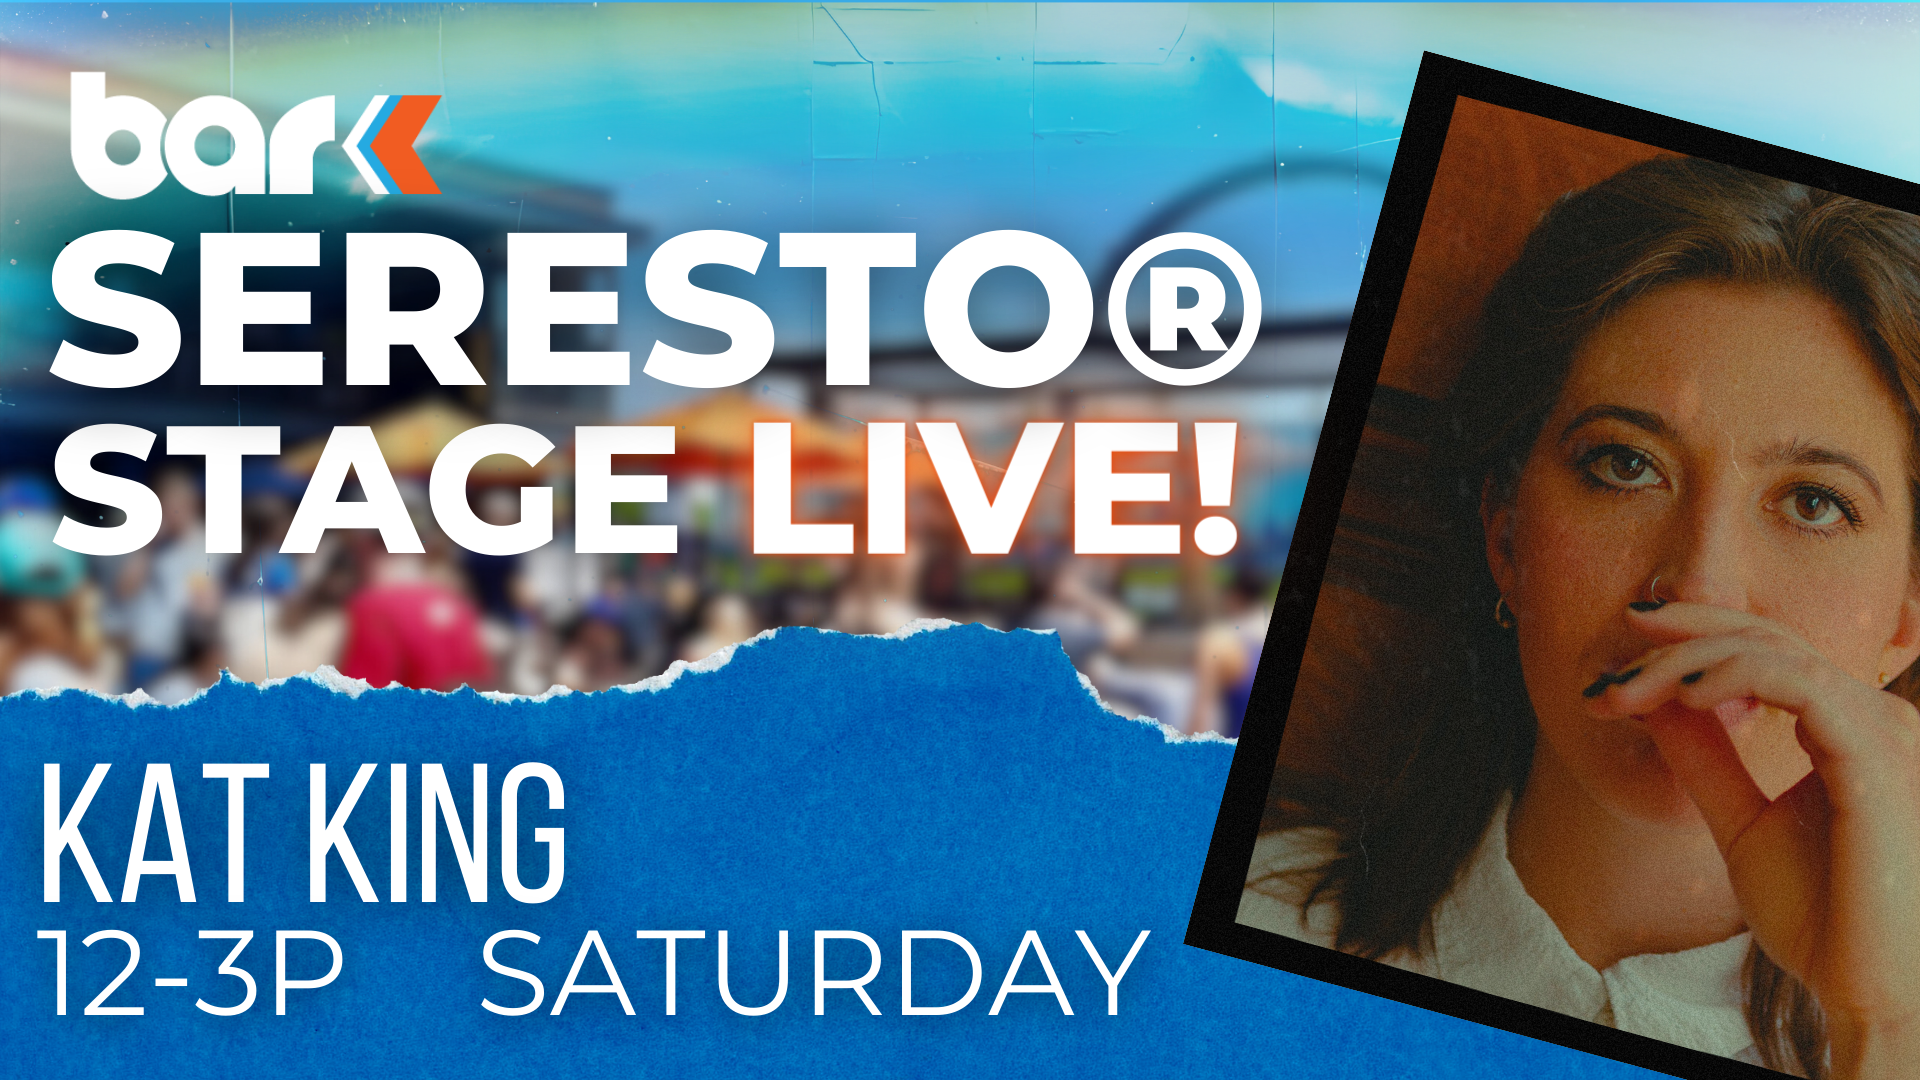 Kat King at Bar K Seresto Stage Live! 12 to 3 pm Saturday.